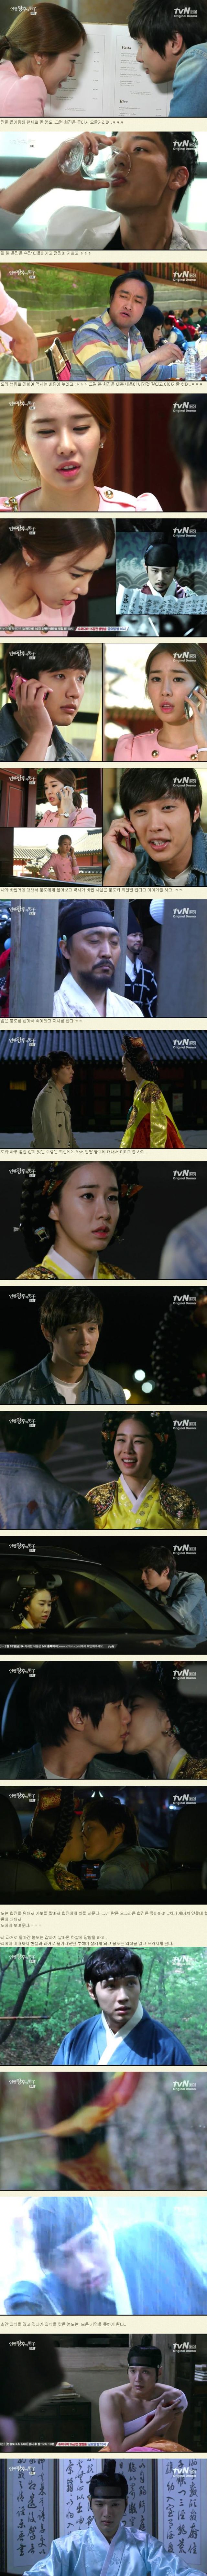 episode 8 captures for the Korean drama 'Queen In-hyun's Man'